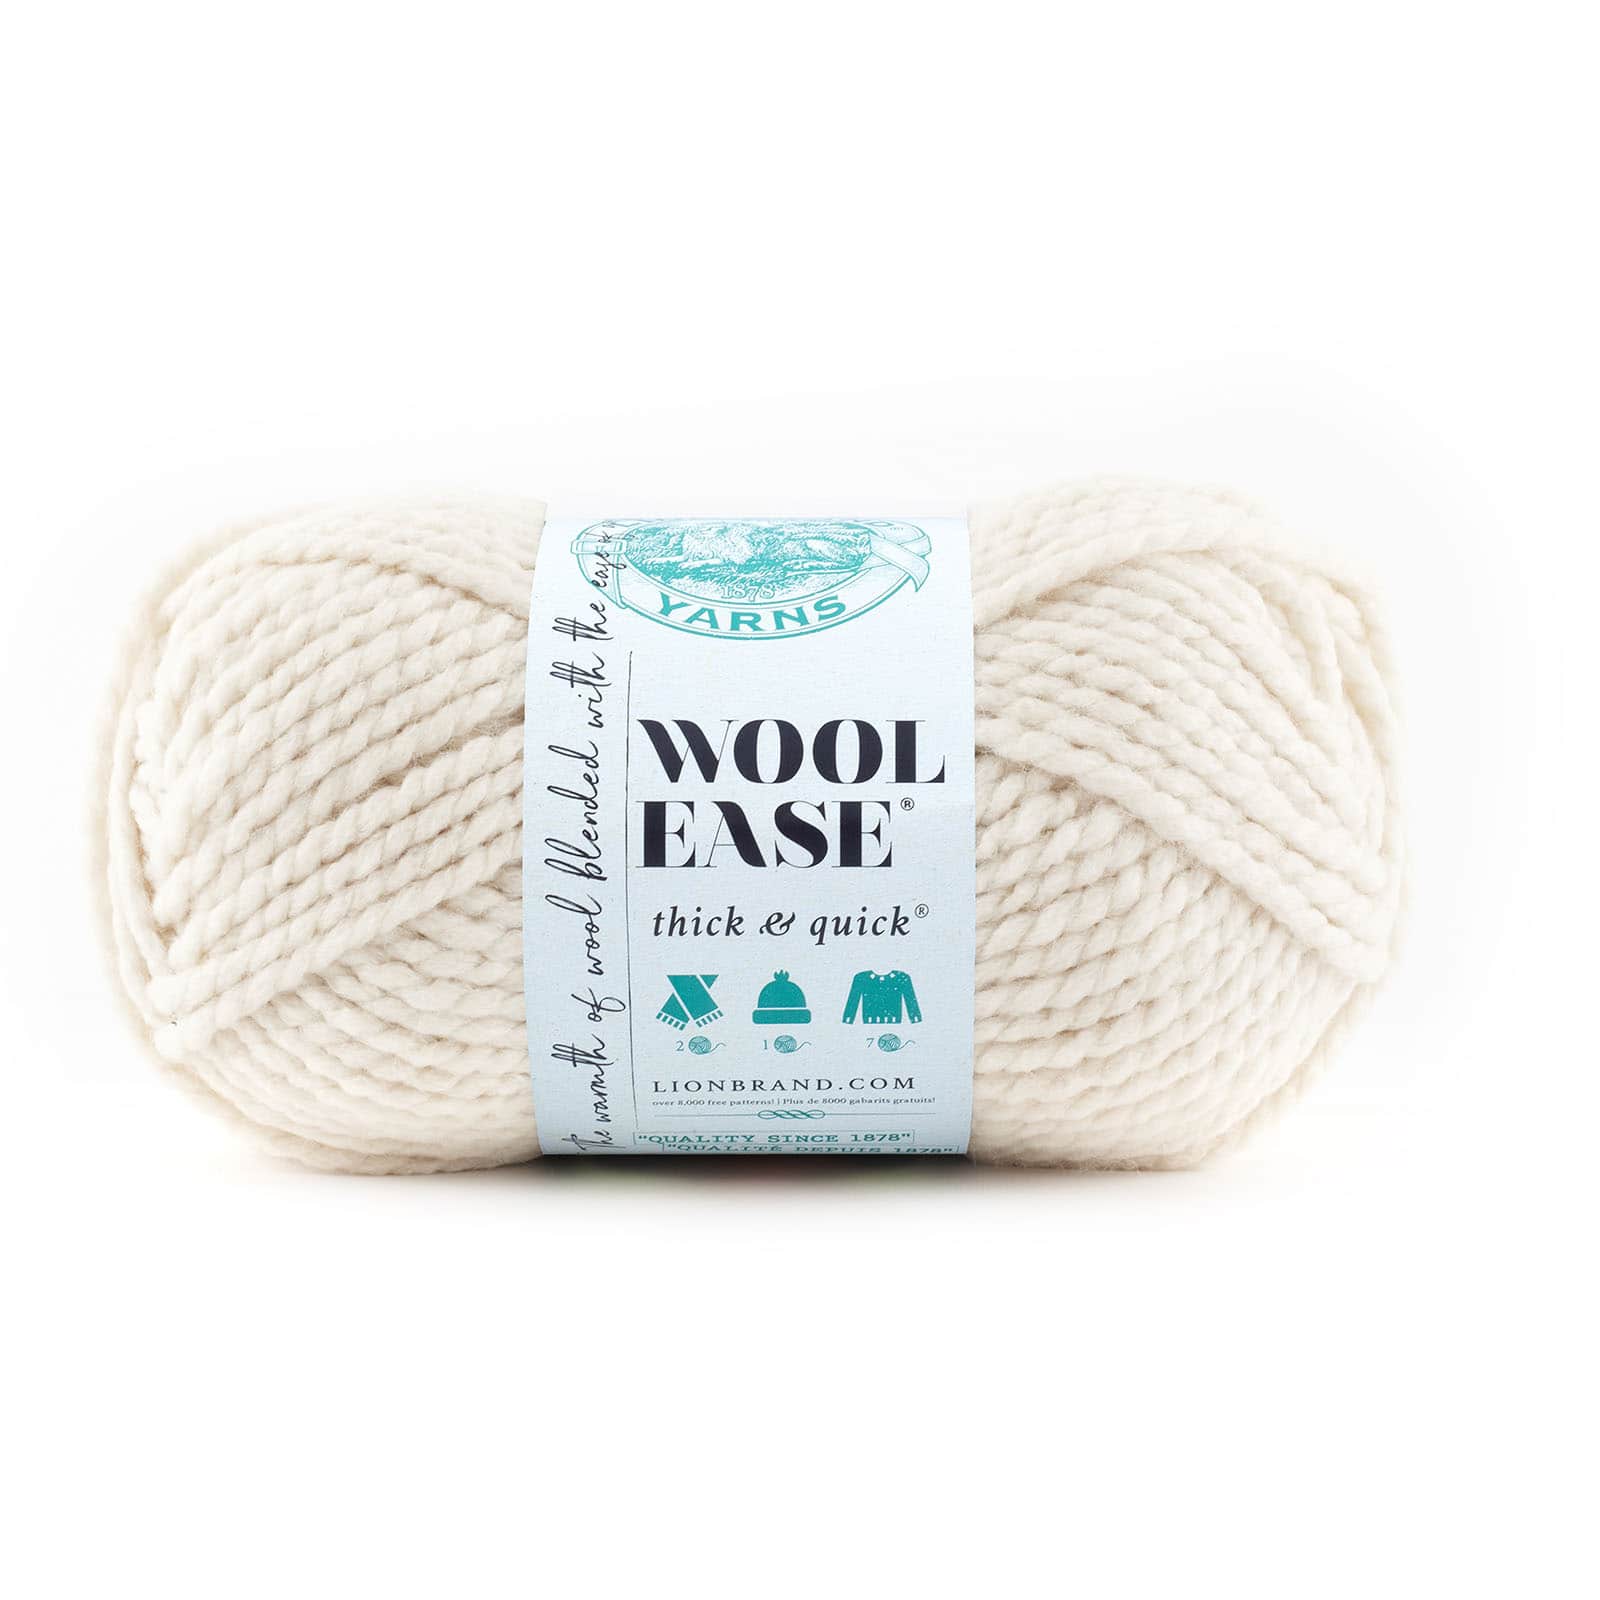 Lion Brand Yarn Woolease Thick & Quick Yarn, 1 Pack, Bubblegum